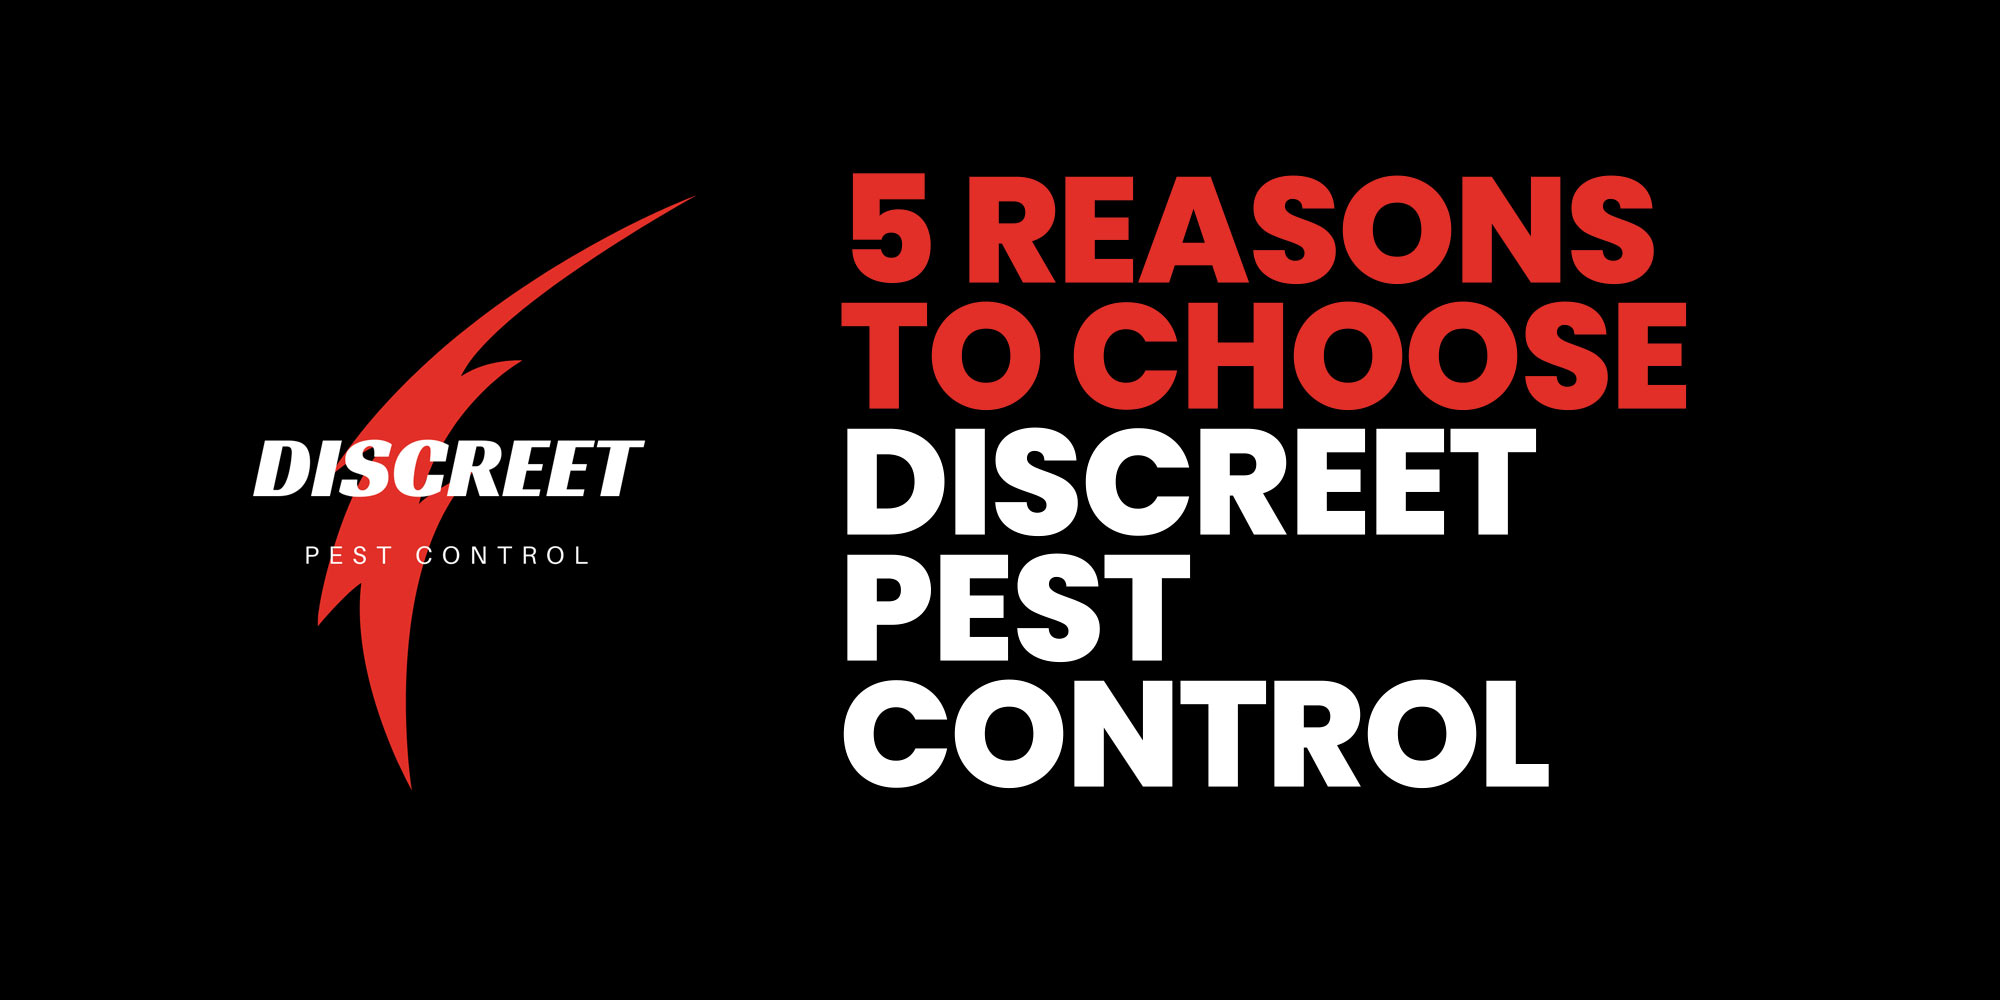 5 Reasons to Choose Discreet Pest Control